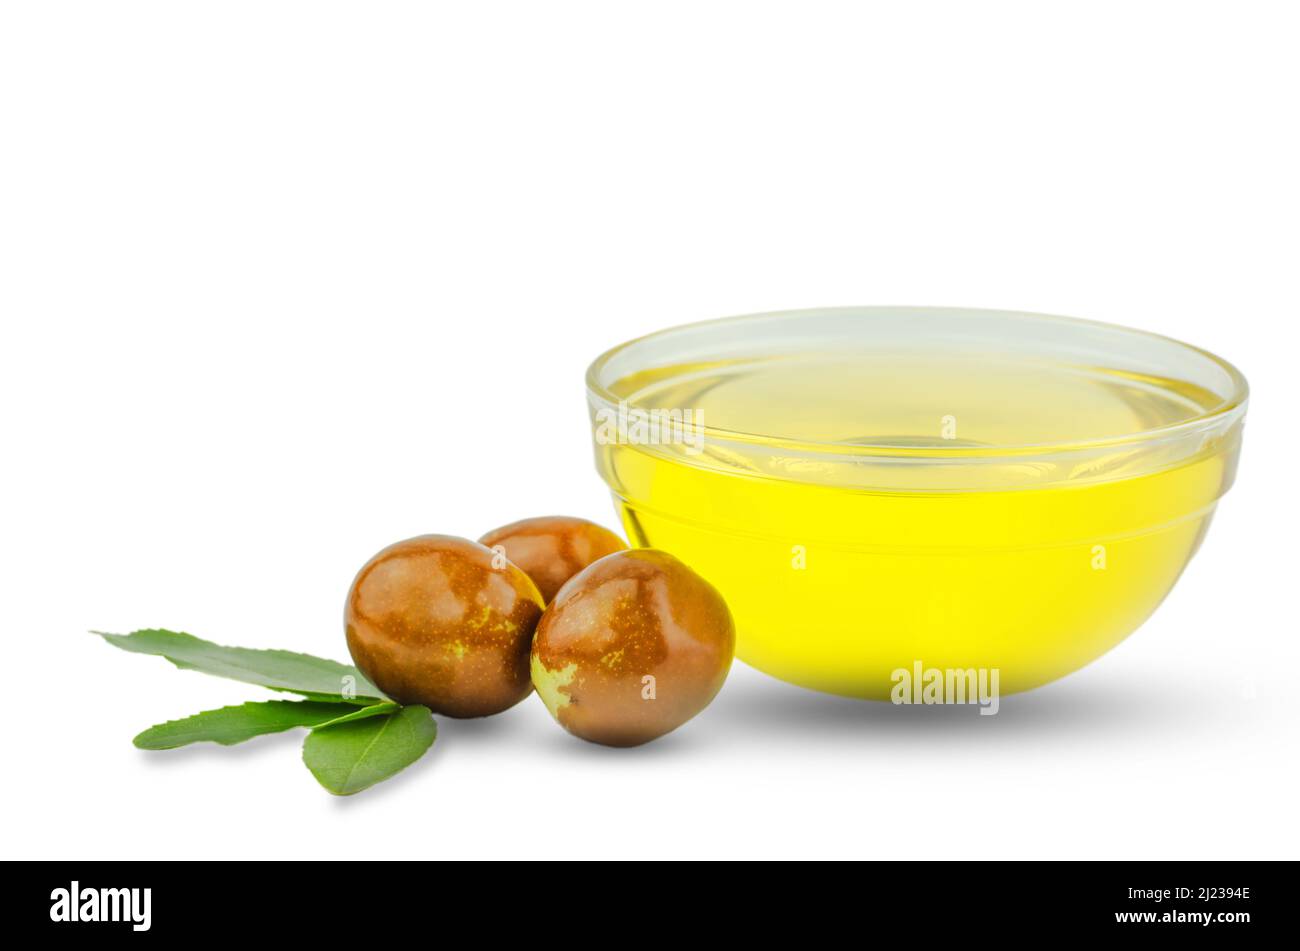 Bowl with jojoba oil and ripe fruits on white background Stock Photo